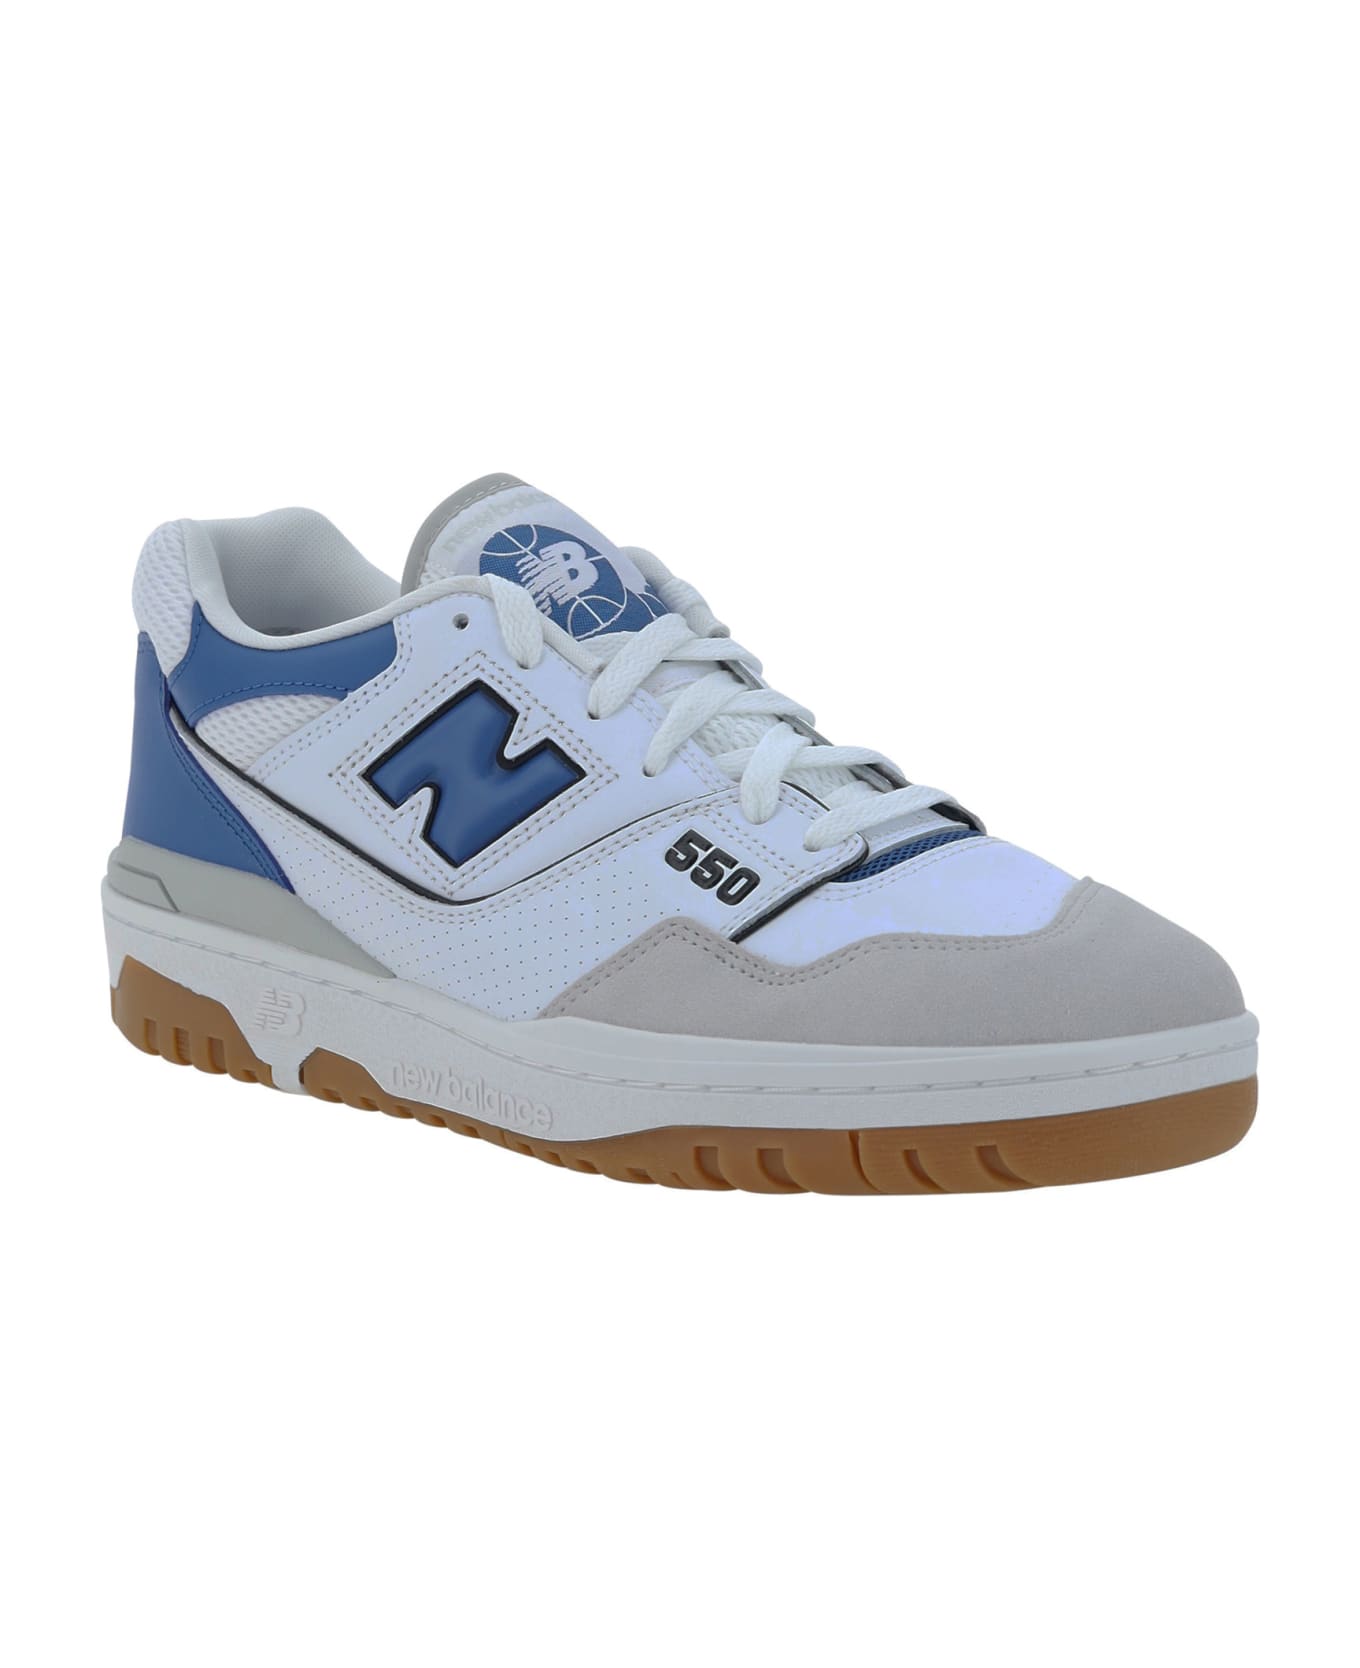 New Balance 550 Sneakers - White/blue スニーカー